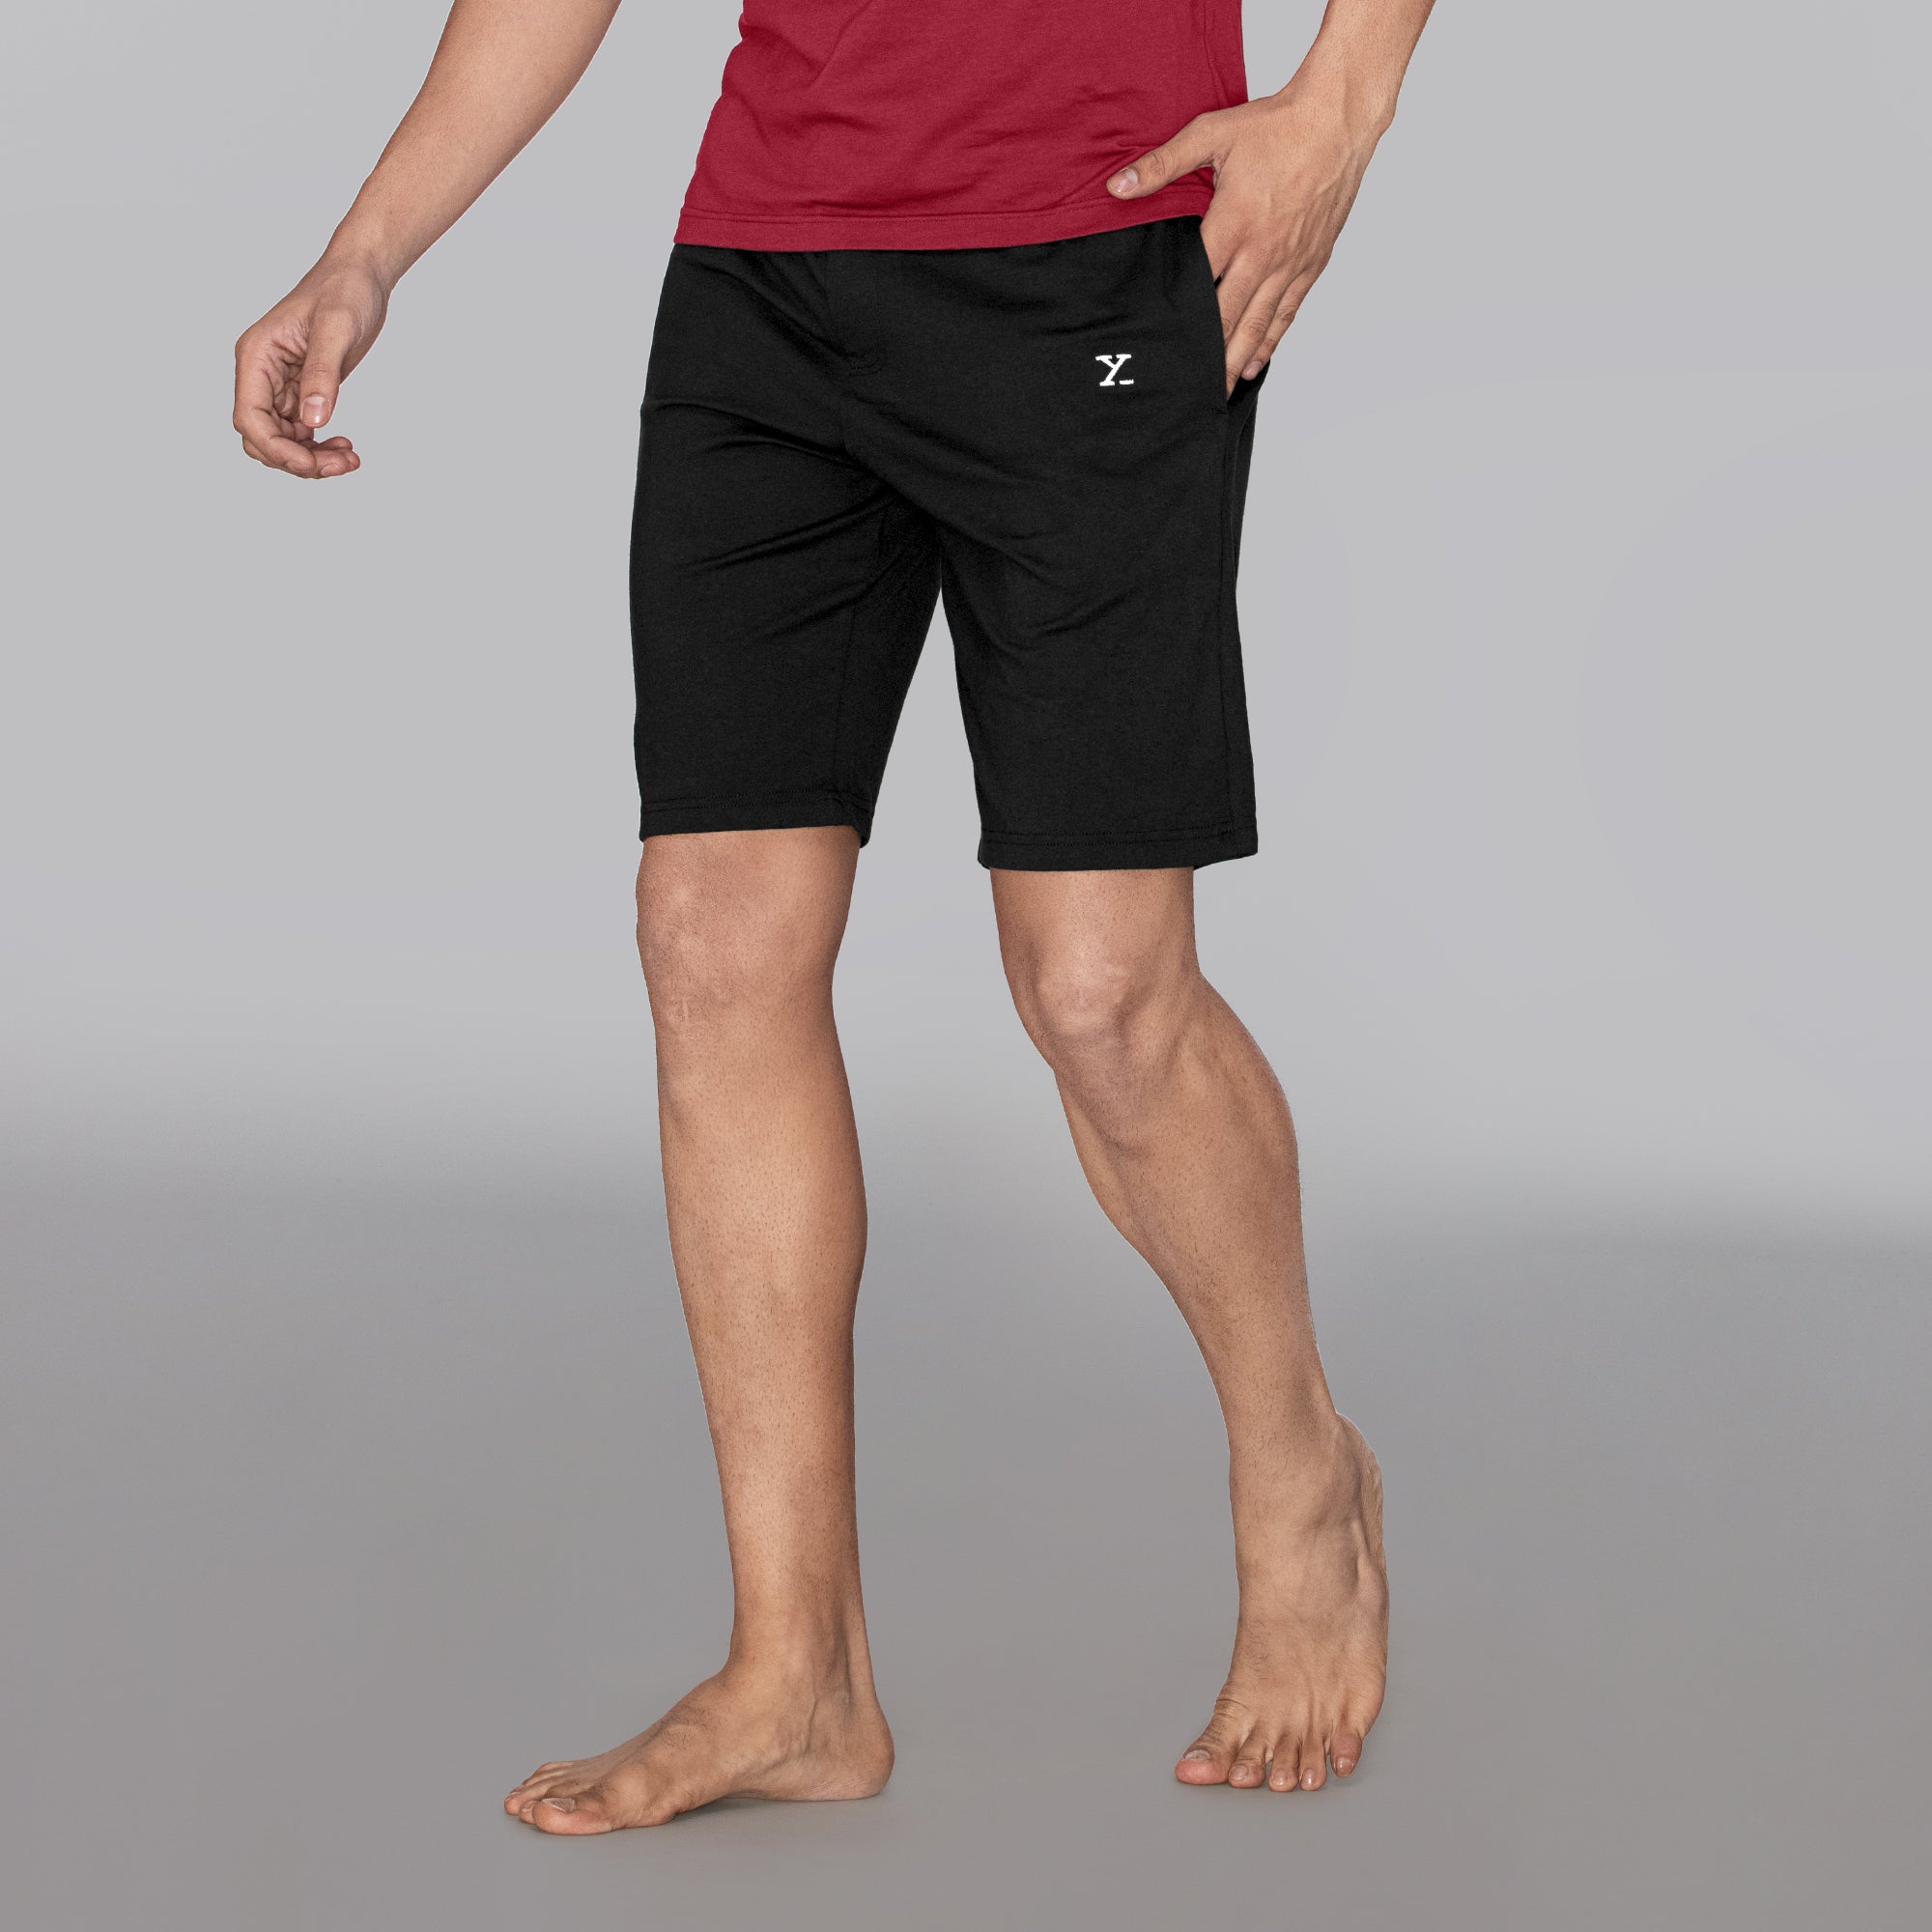 Buy Athleisure Shorts for Men Online, Mens Cotton Shorts